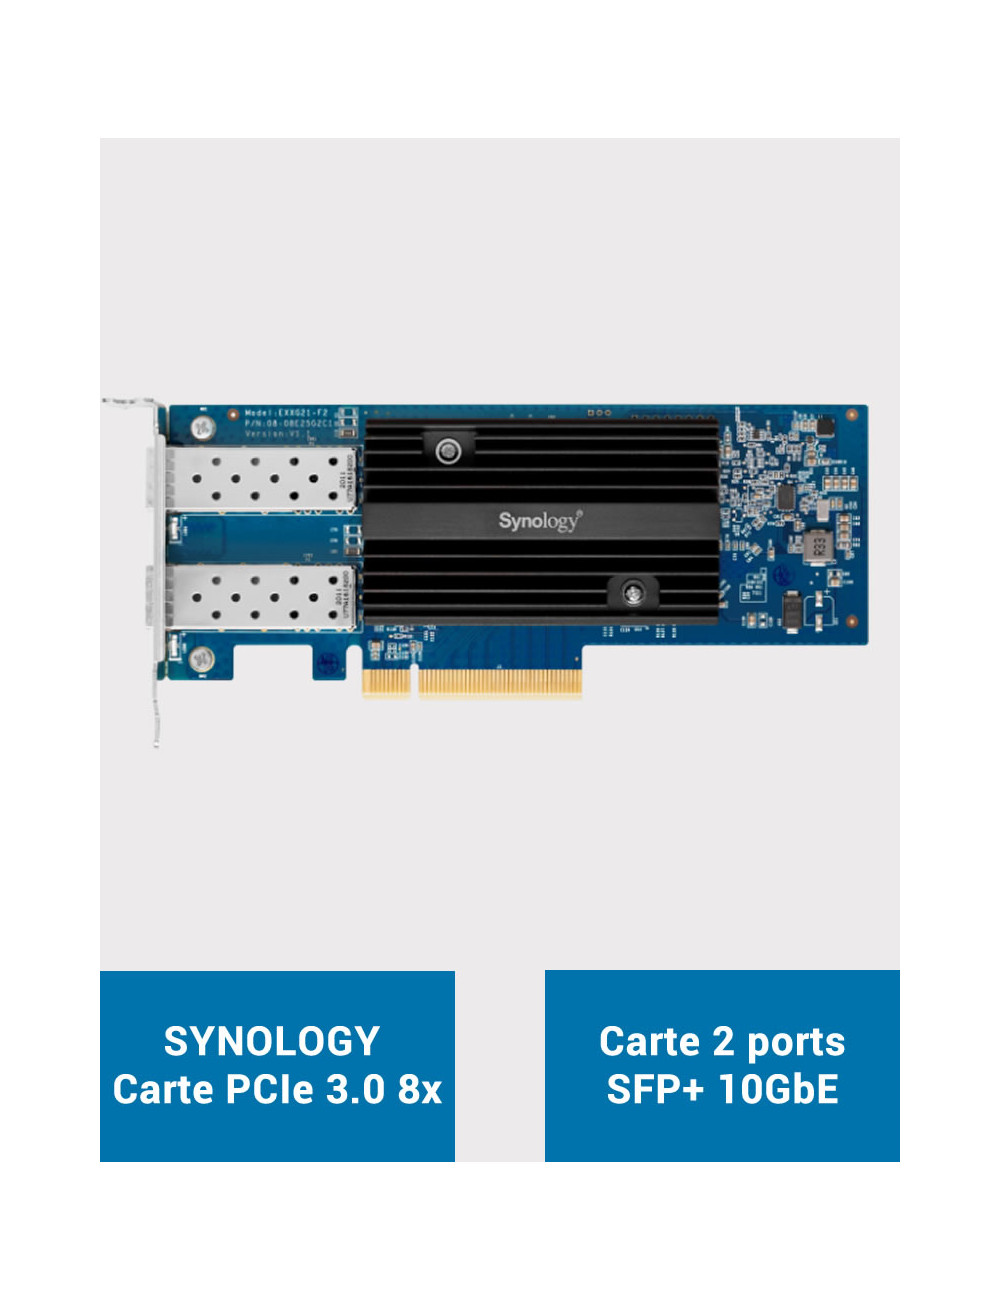 Synology Tarjeta de expansión SFP+ de 10 GBE de 2 puertos